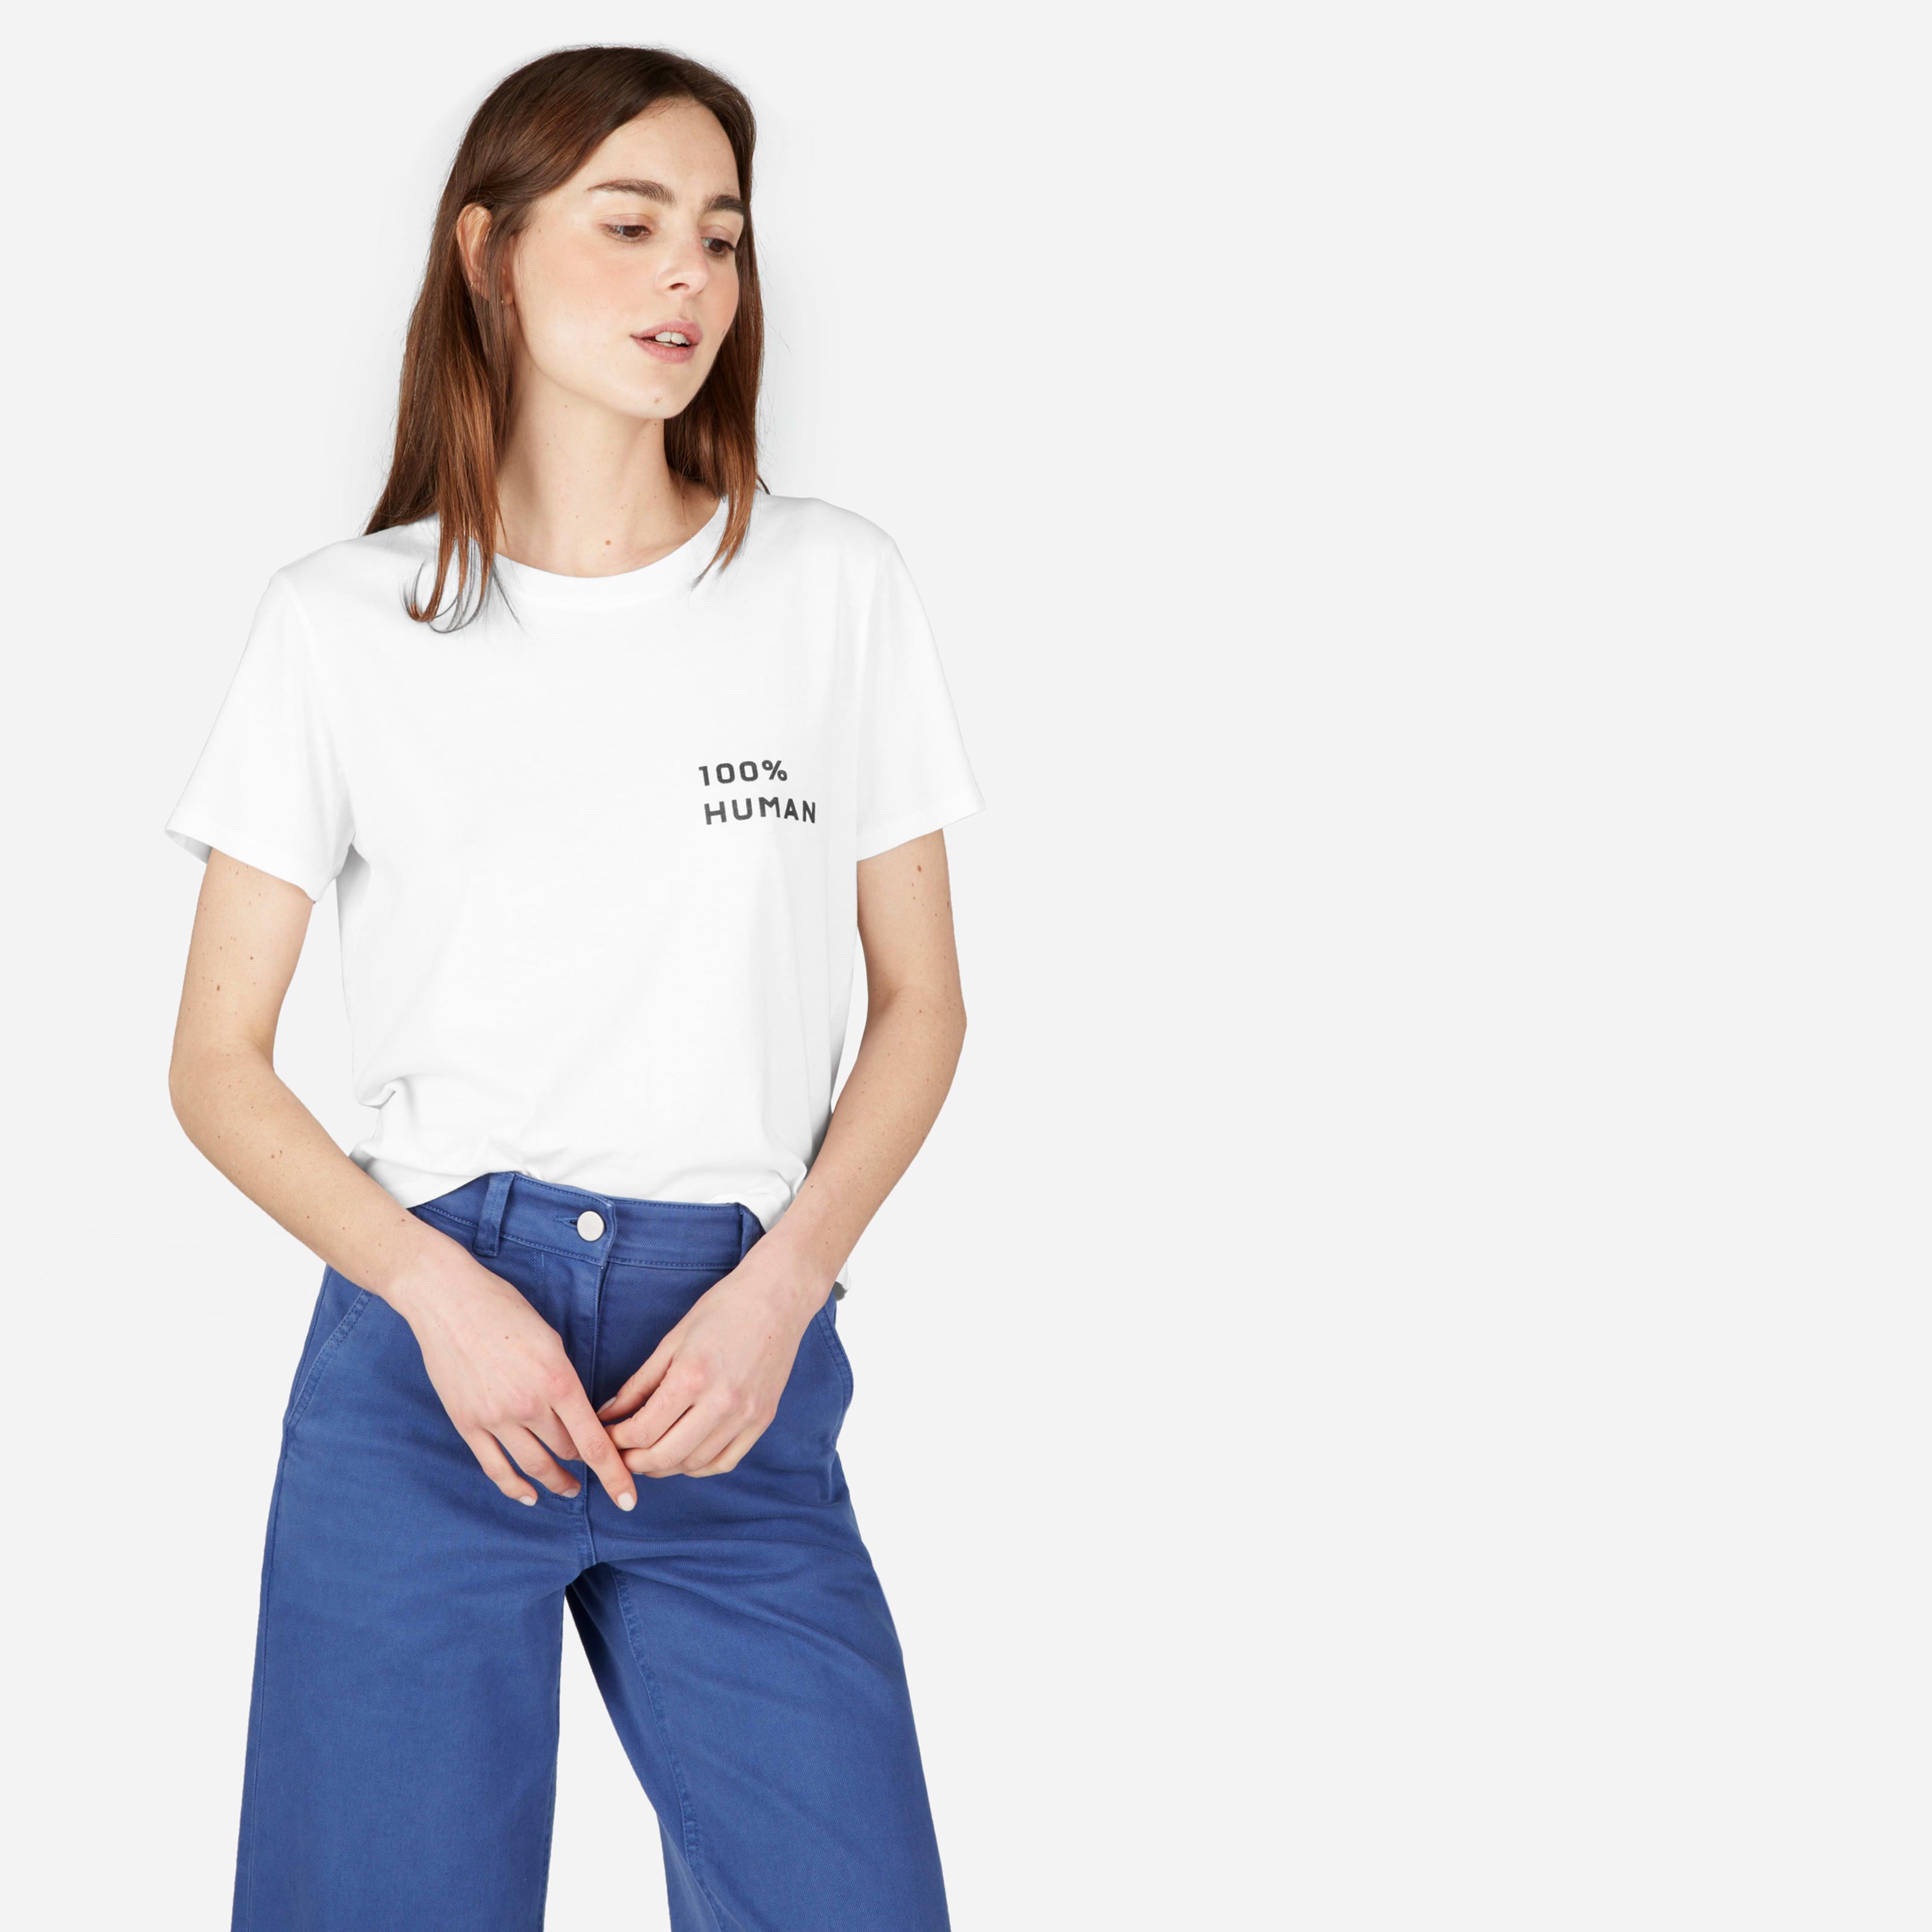 Women's 100% Human Box-Cut T-Shirt by Everlane in White, Size XS | Everlane